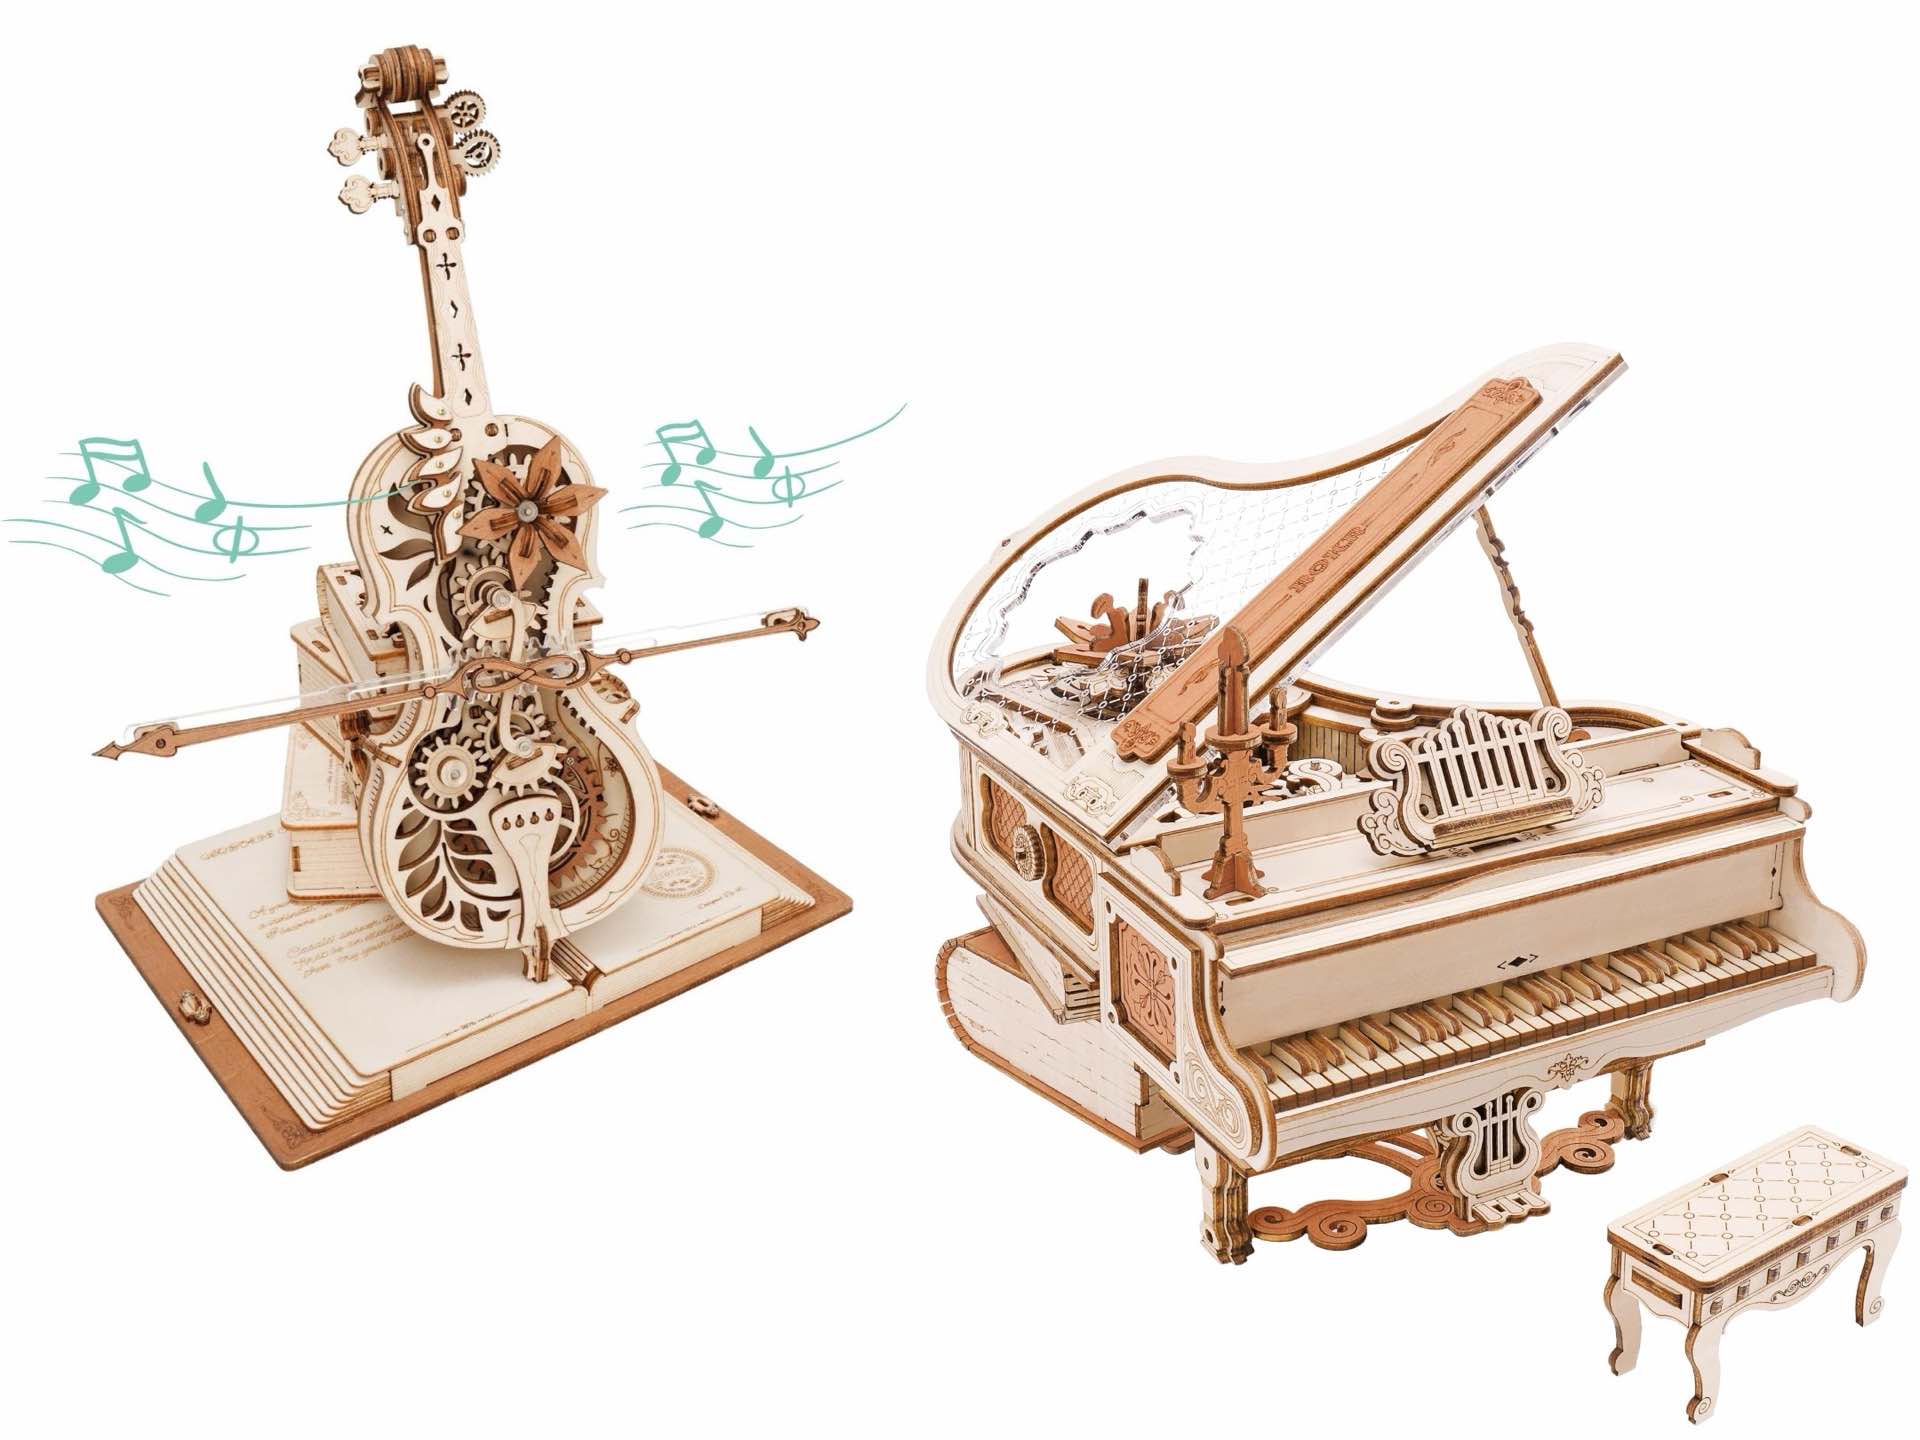 rokr-magic-cello-and-magic-piano-wooden-music-box-model-kits